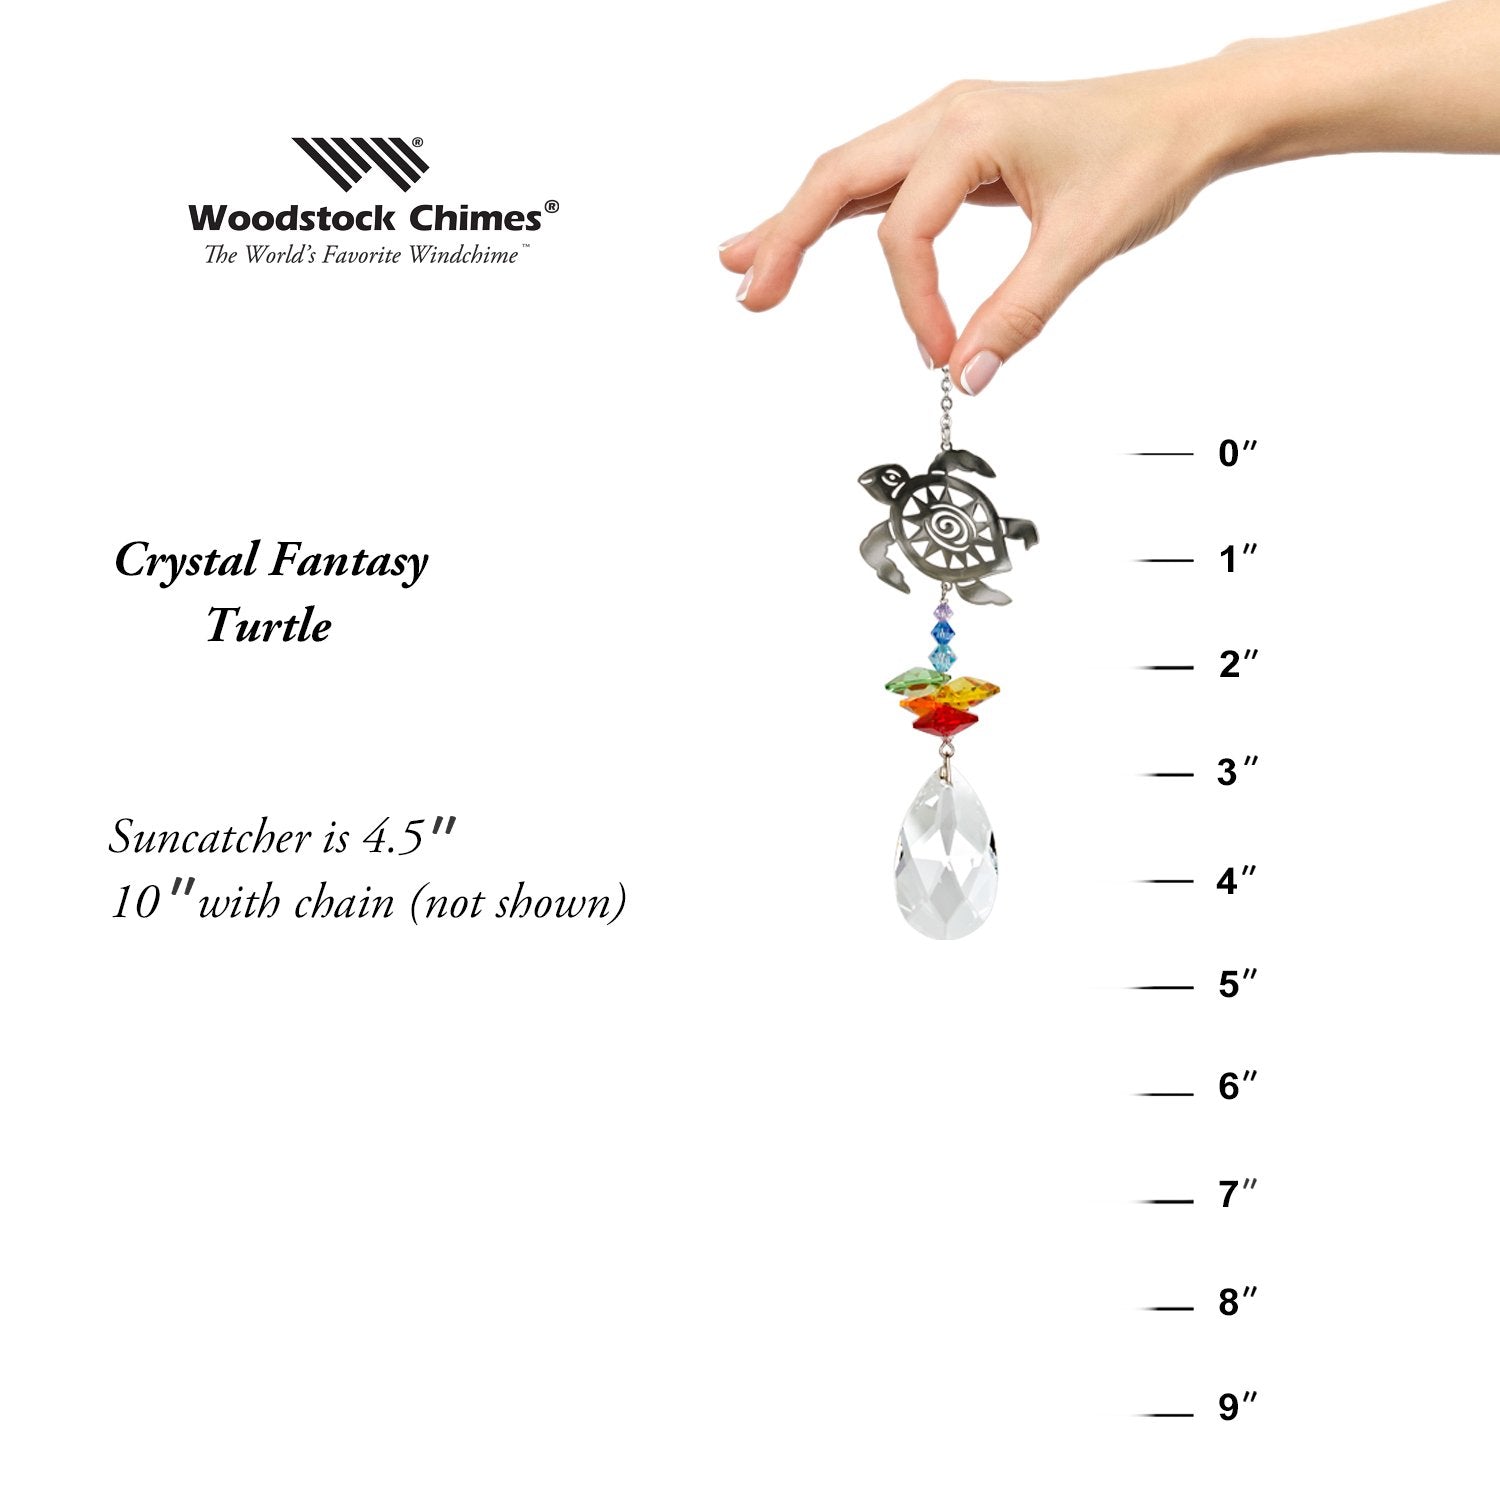 Crystal Fantasy Suncatcher - Turtle proportion image